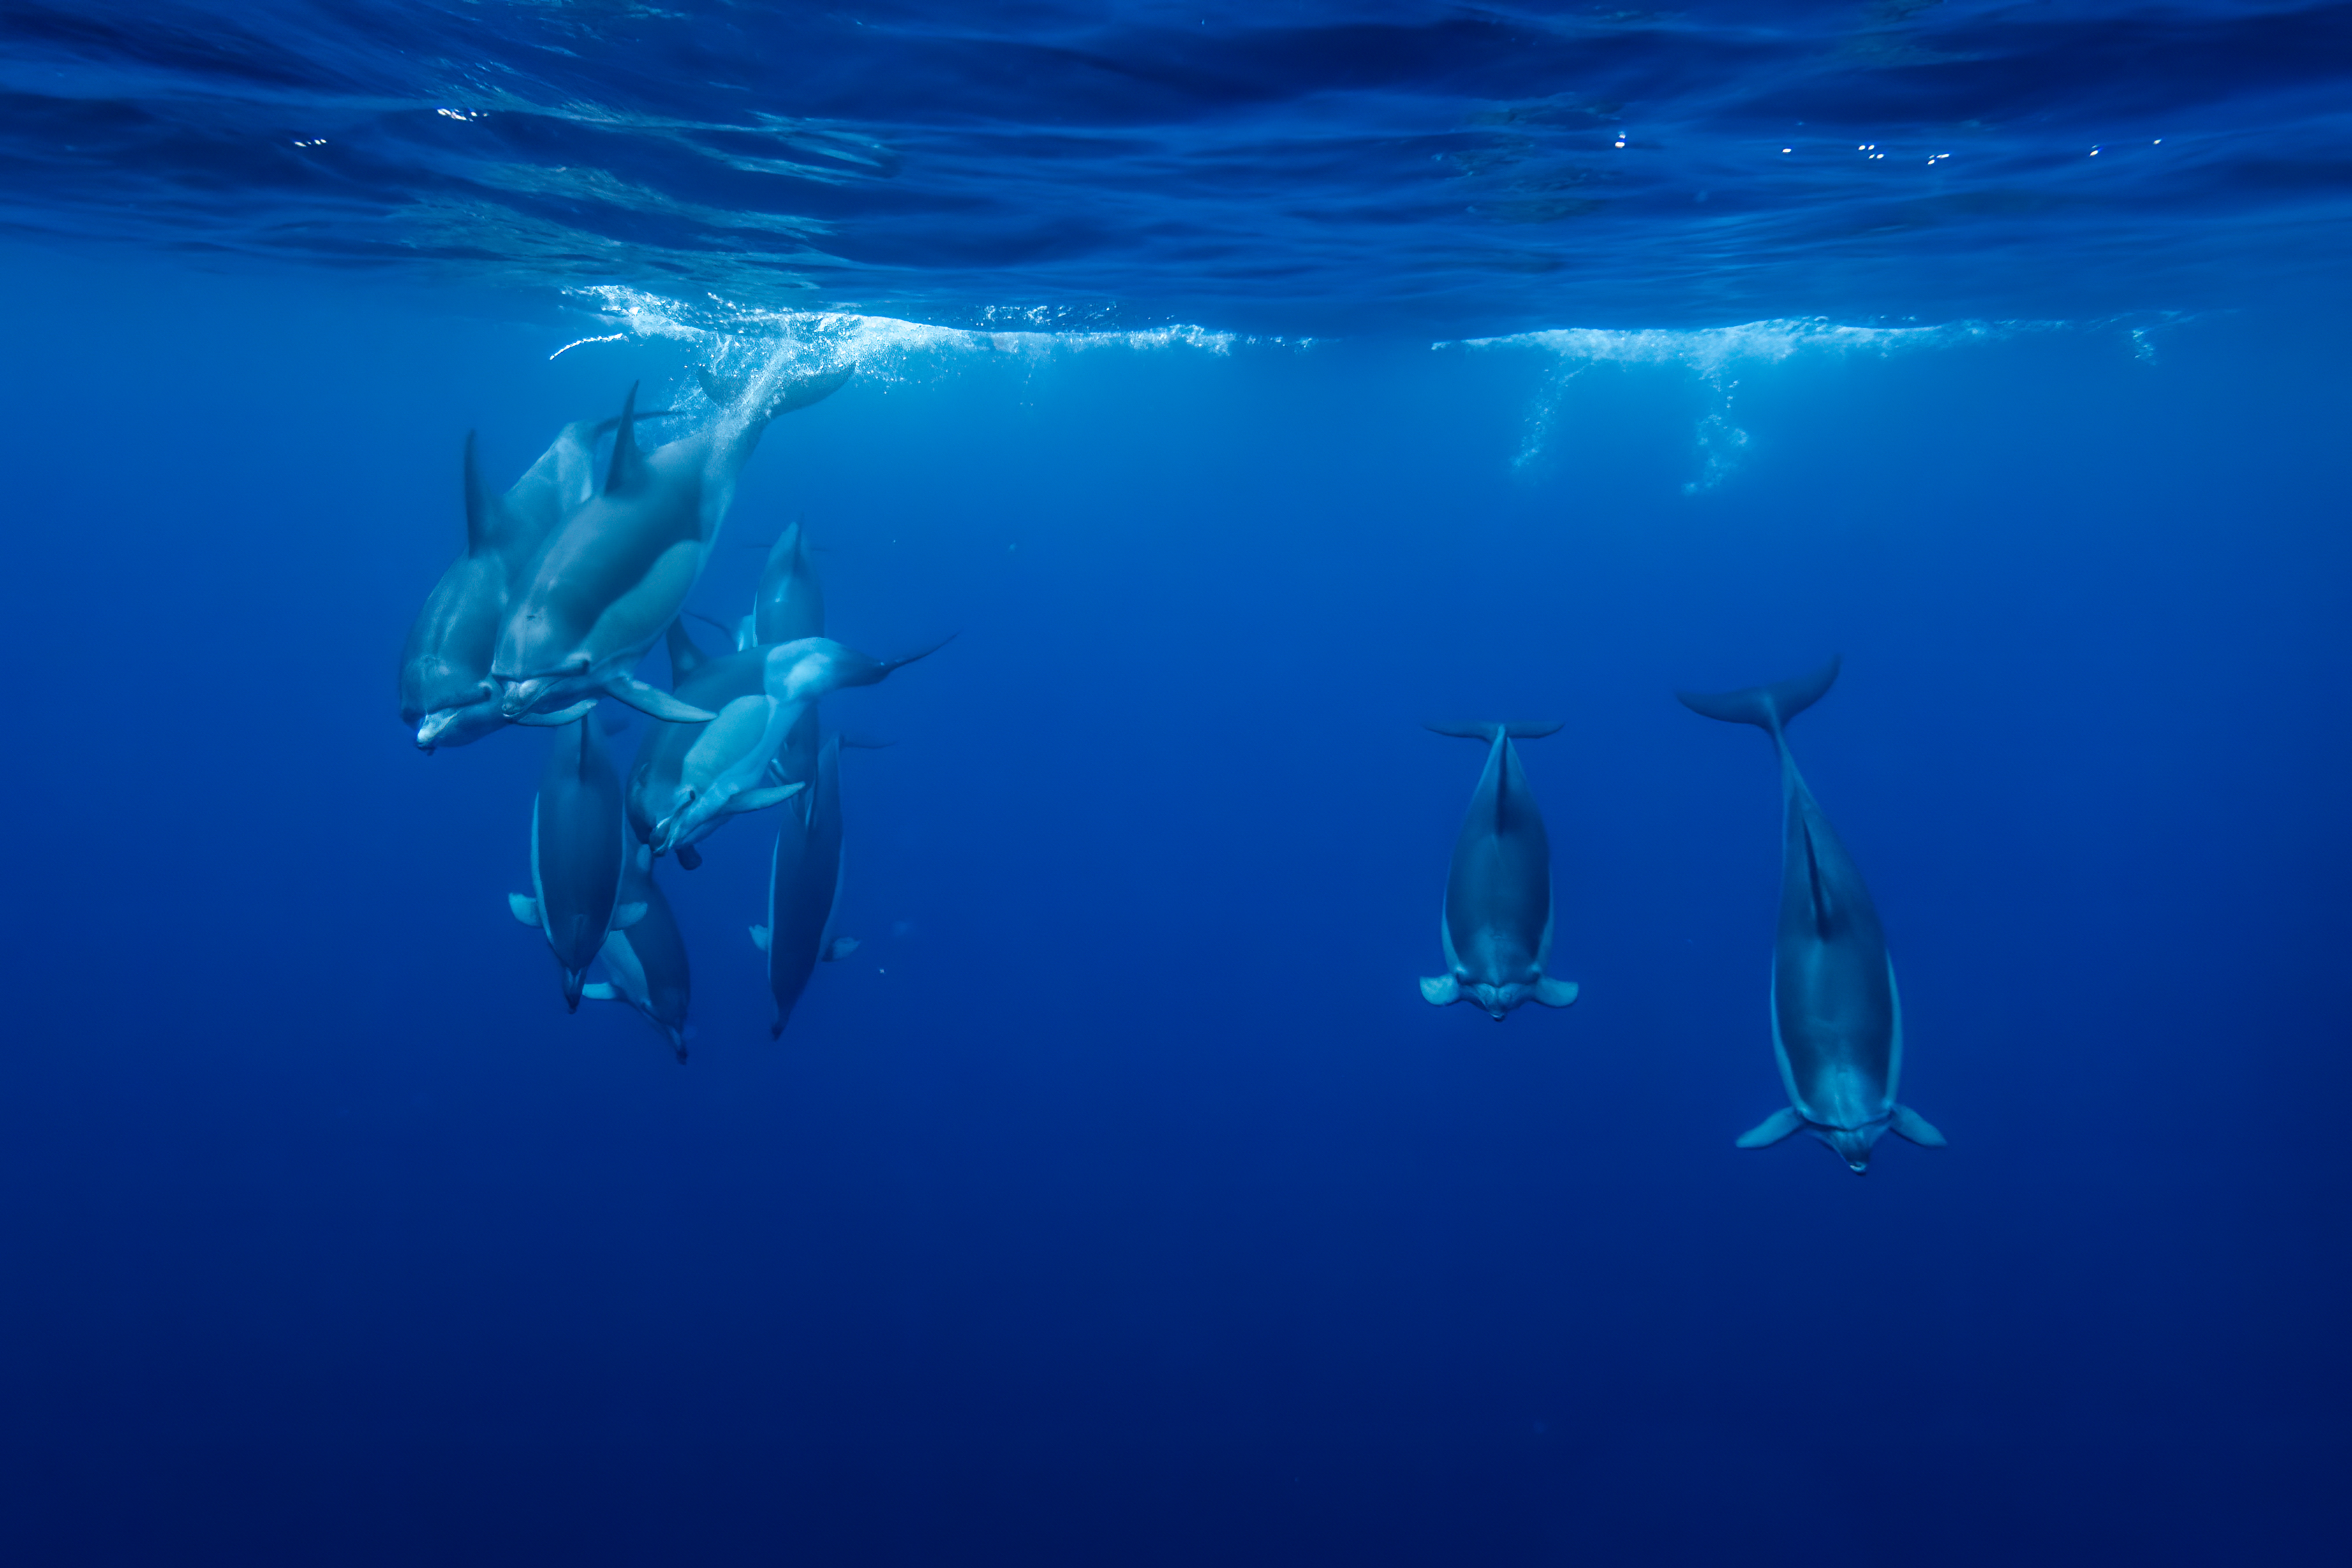 common-atlantic-dolphins-delphinus-delphis-atlantic-ocean-around-sao-miguel-azores_52412665122_o.jpg